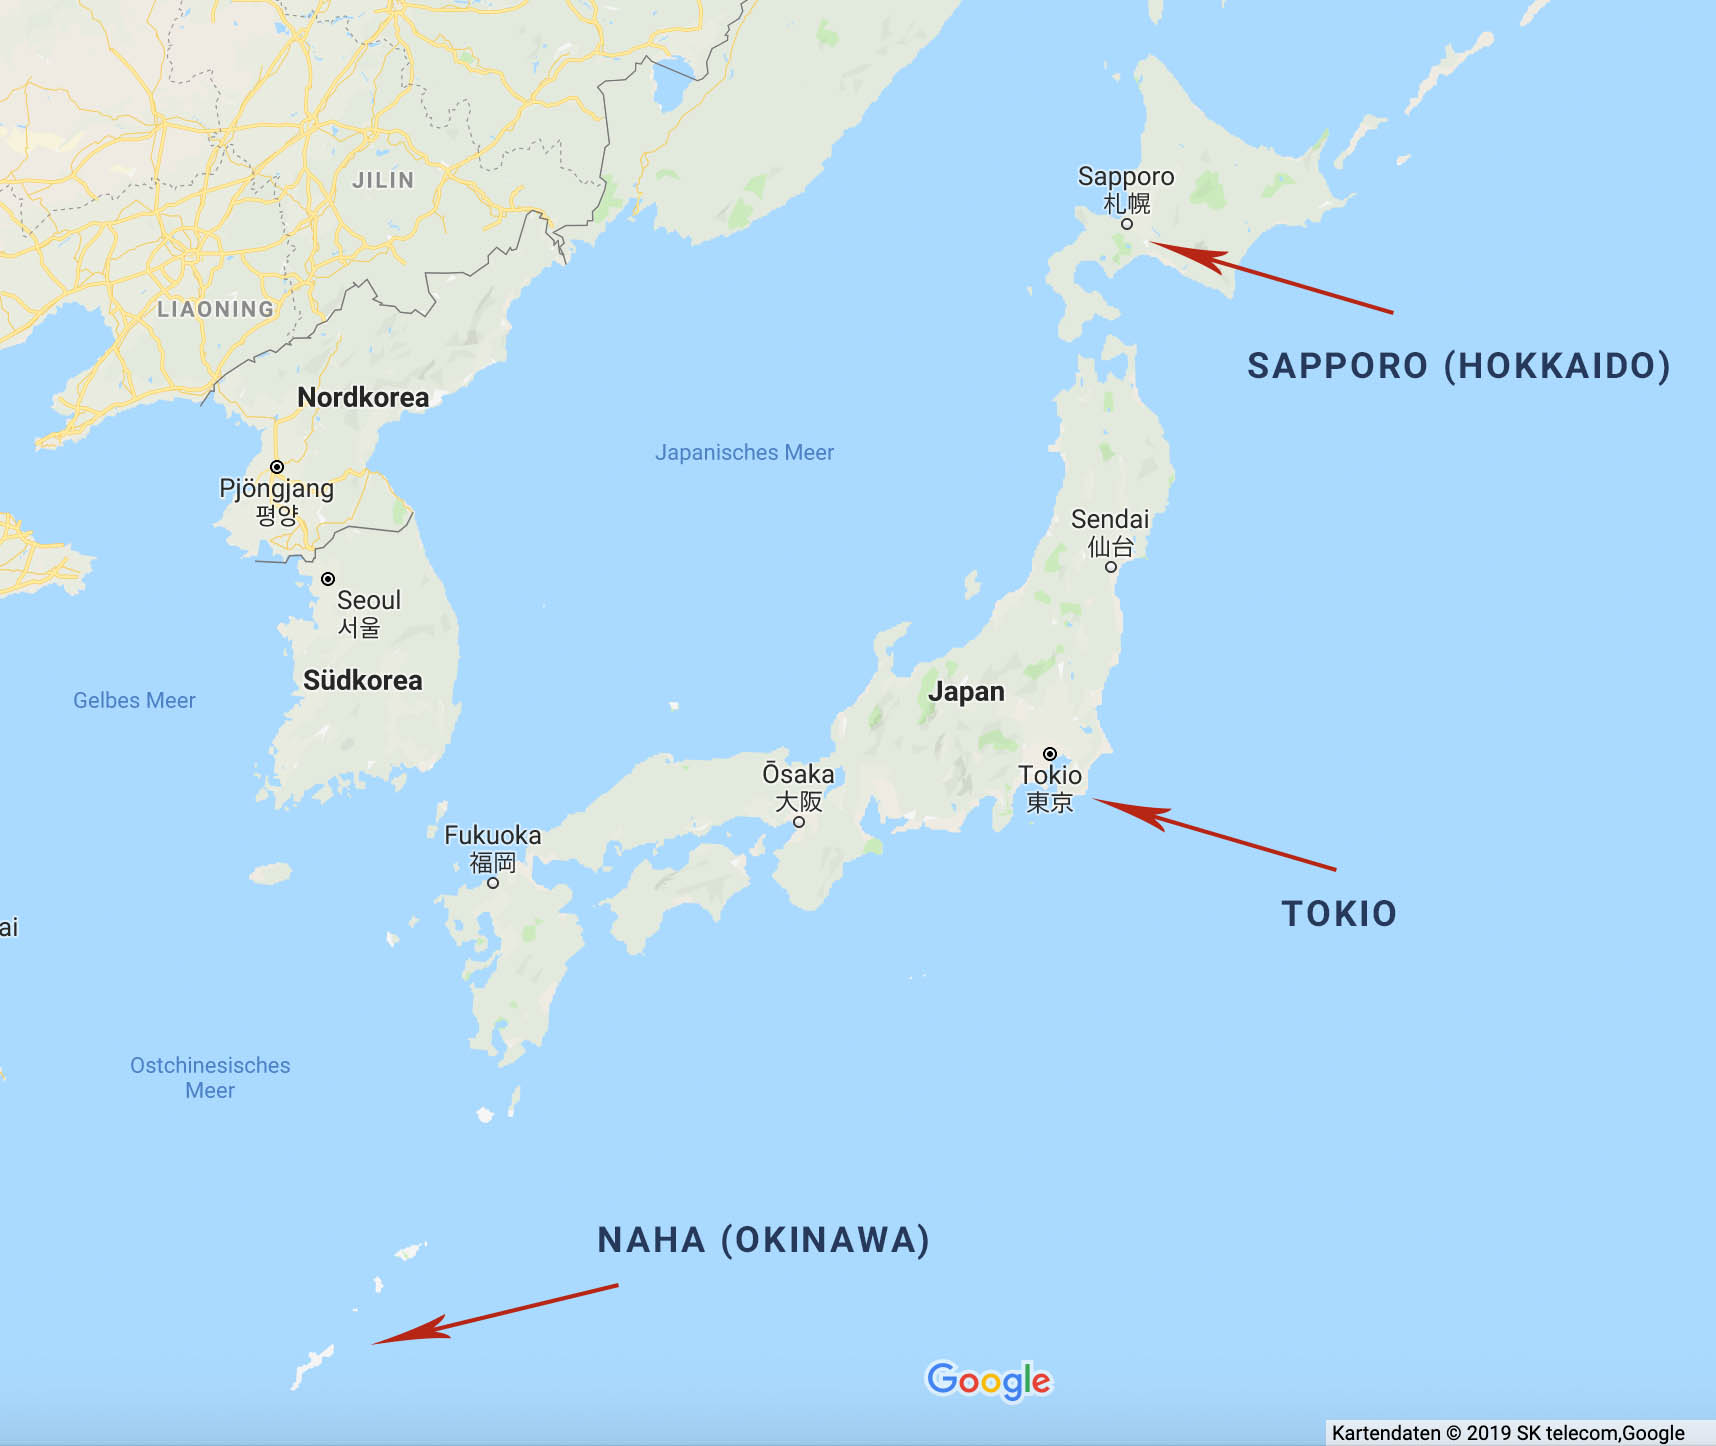 Karte Japan - Quelle: GoogleMaps